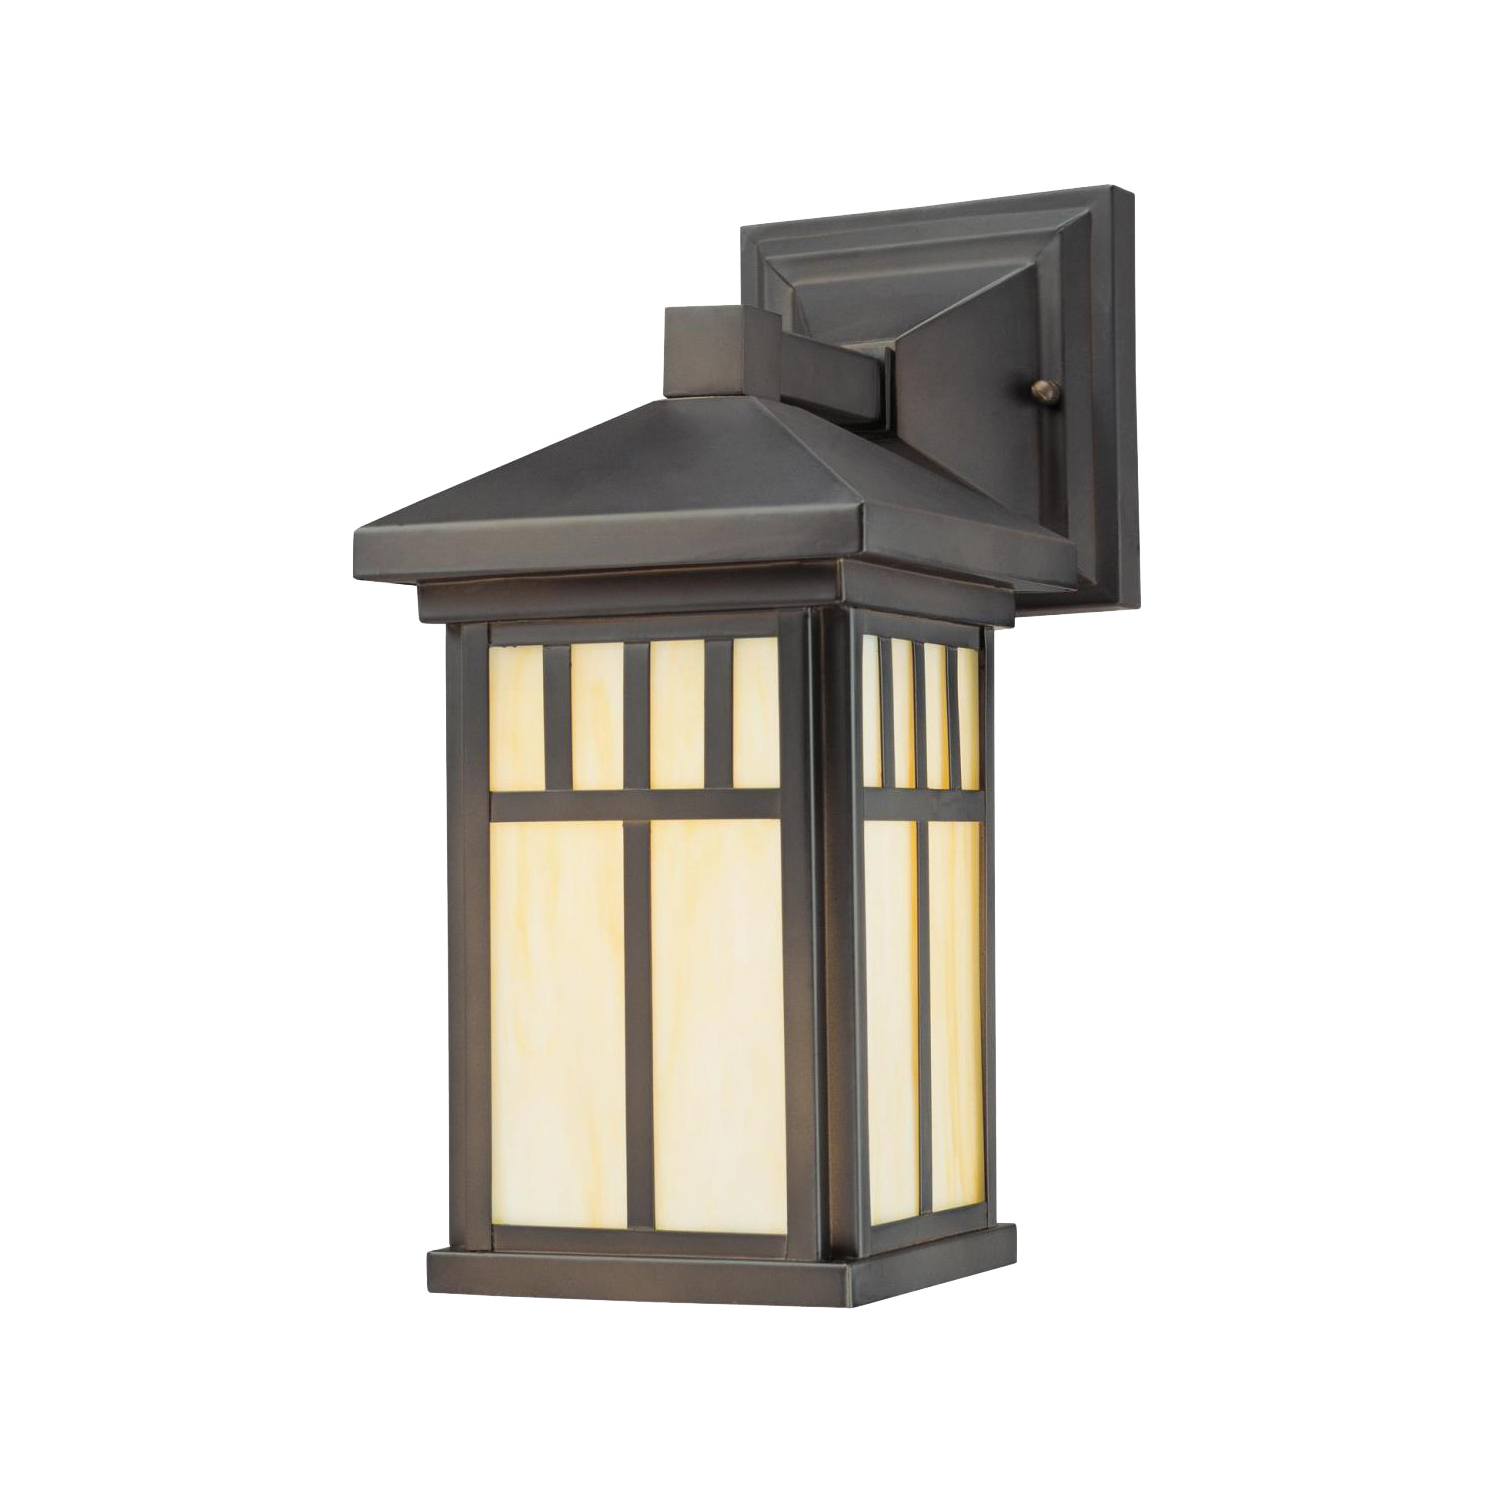 6732848 Wall Lantern, 120 V, LED Lamp, Steel Fixture, Oil-Rubbed Bronze Fixture